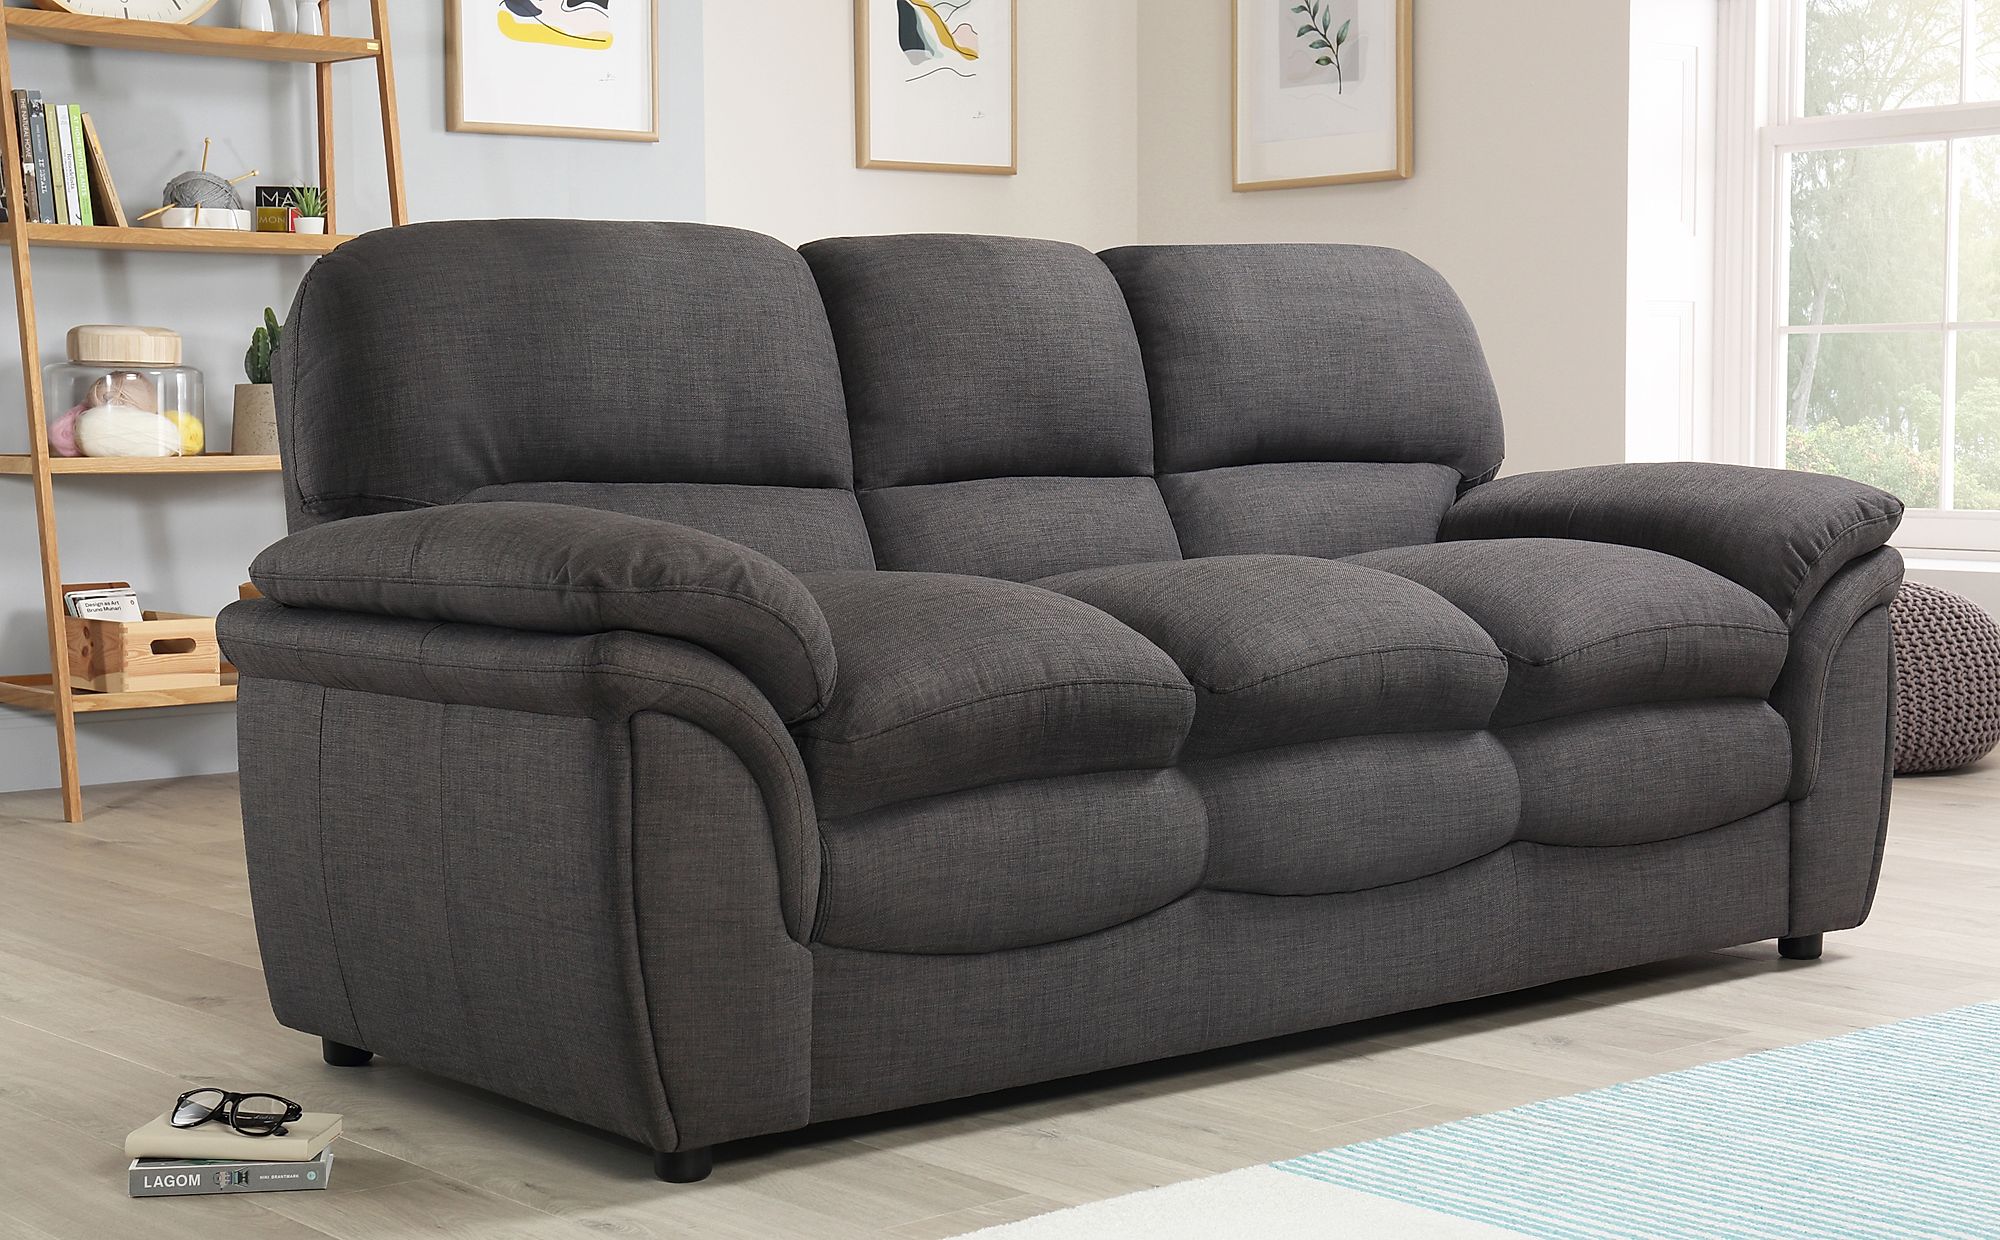 3 seater fabric sofa bed grey